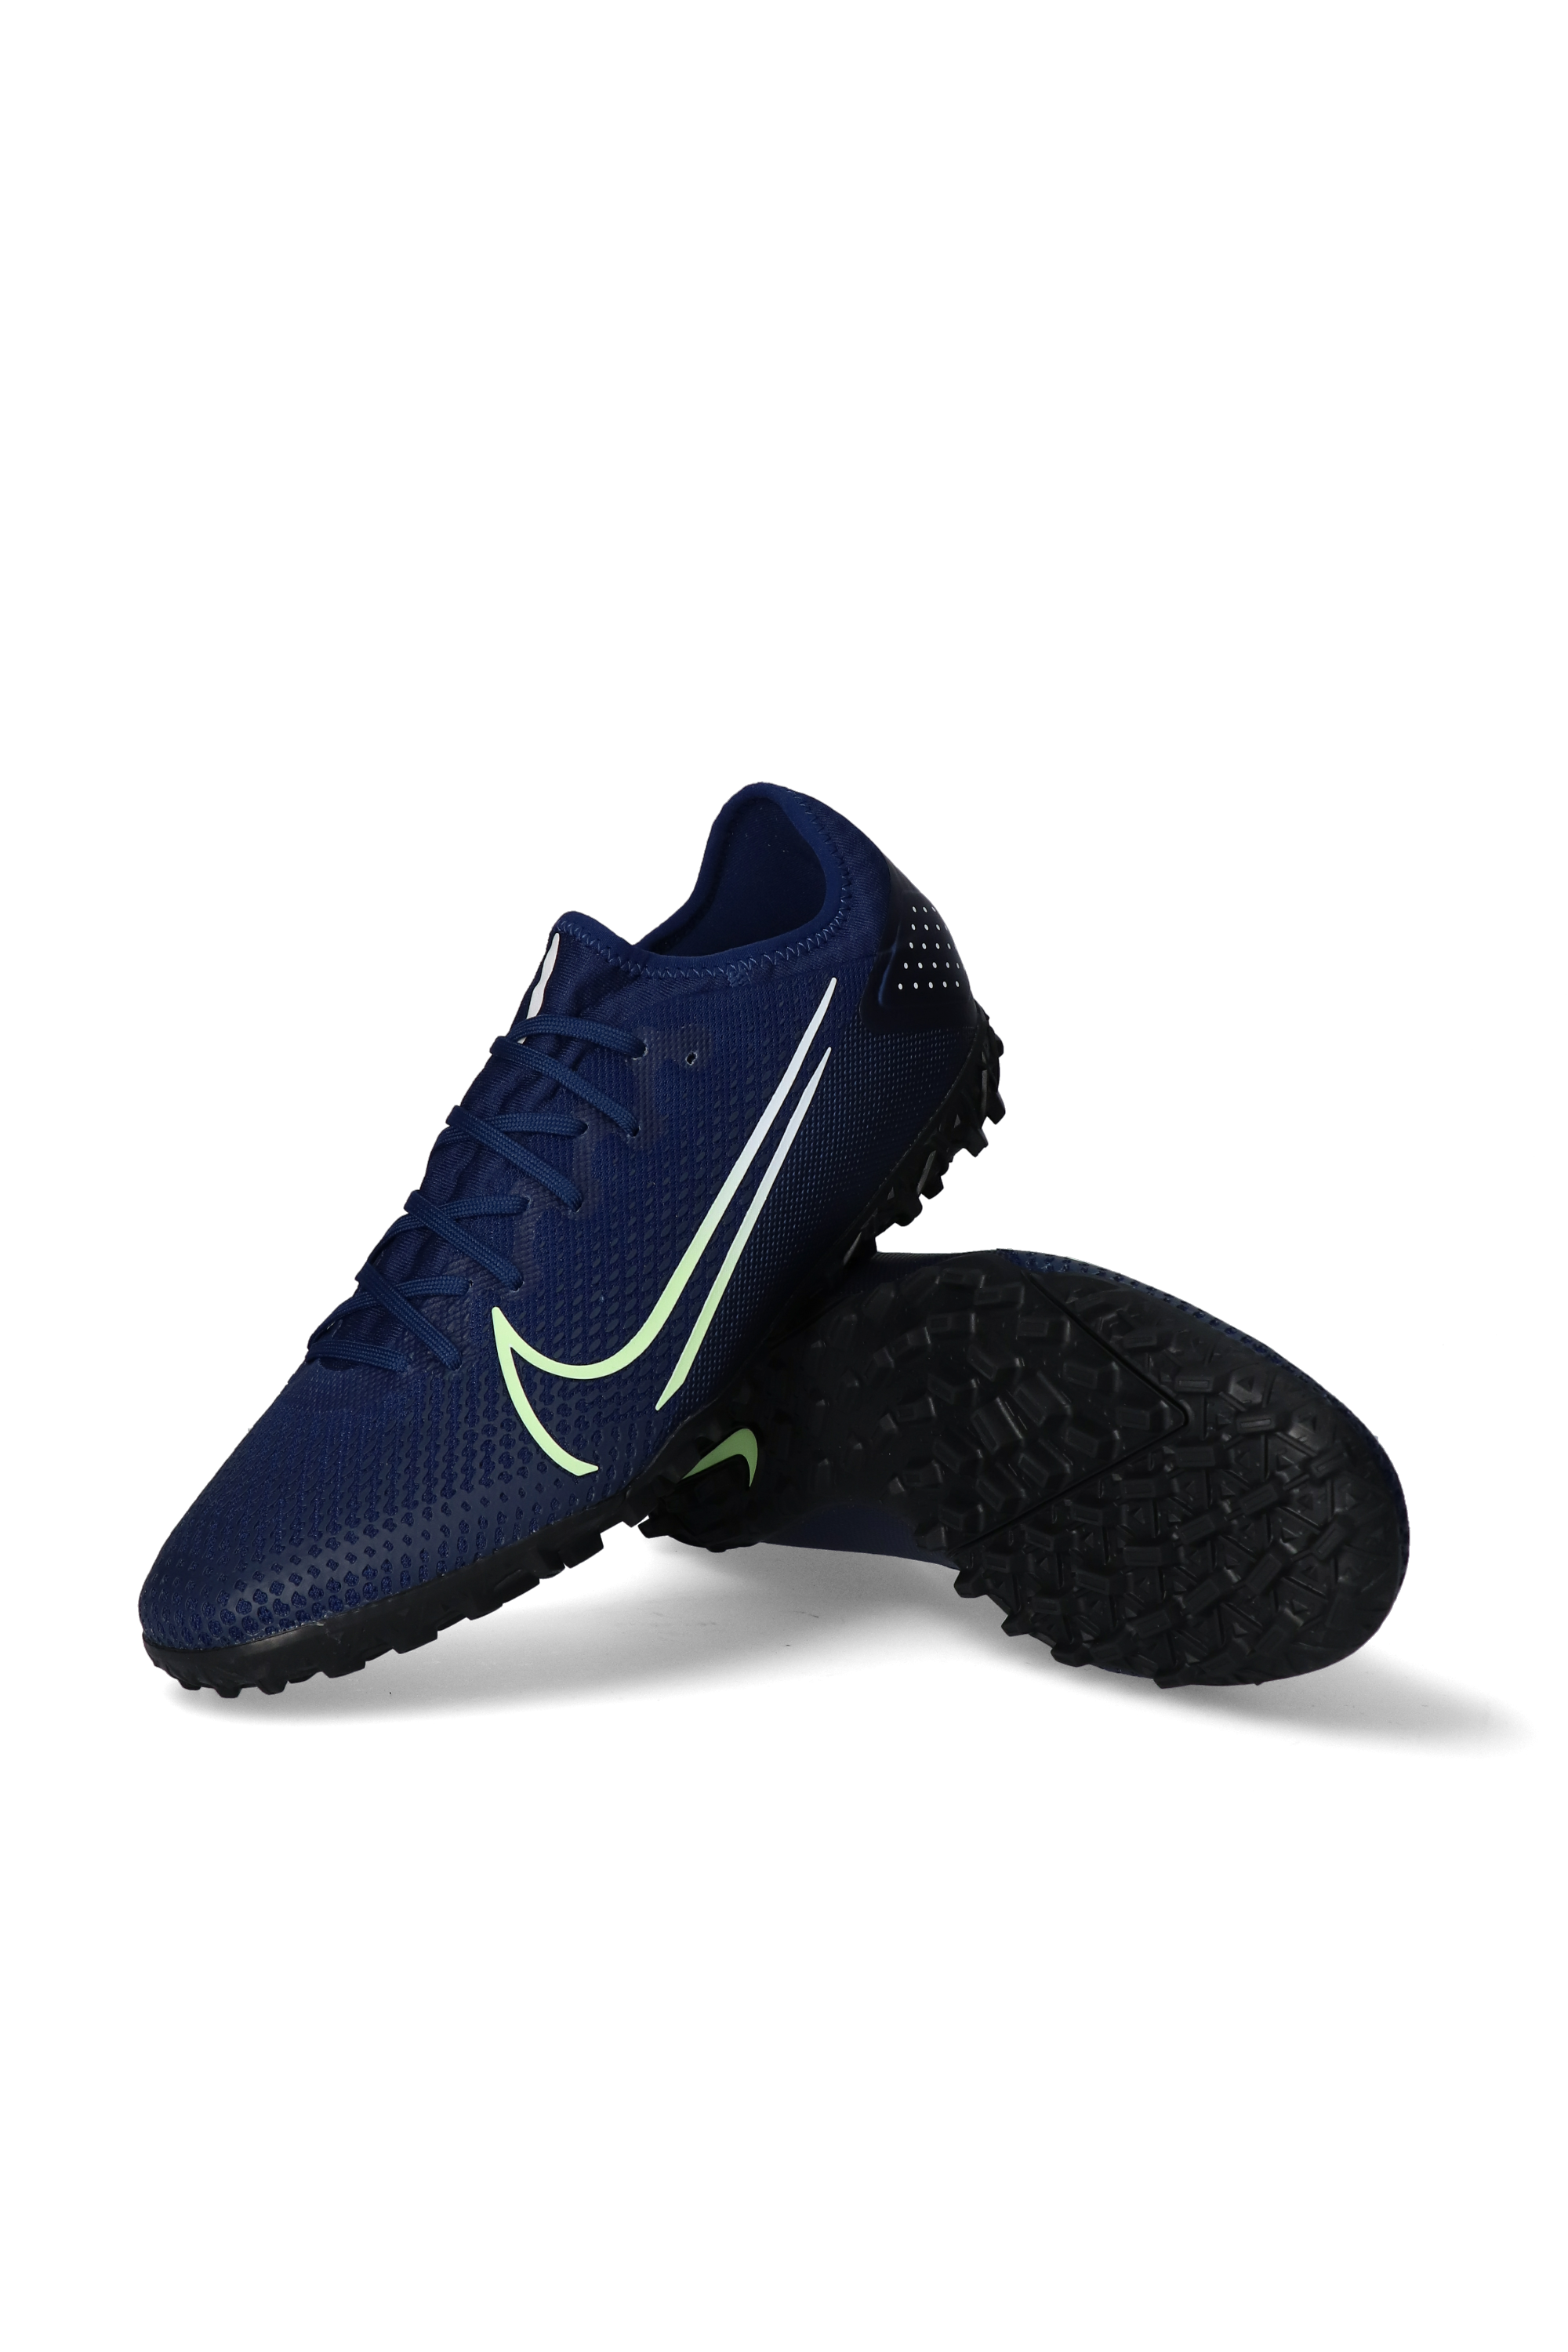 Nike Vapor 13 Pro MDS TF | R-GOL.com 